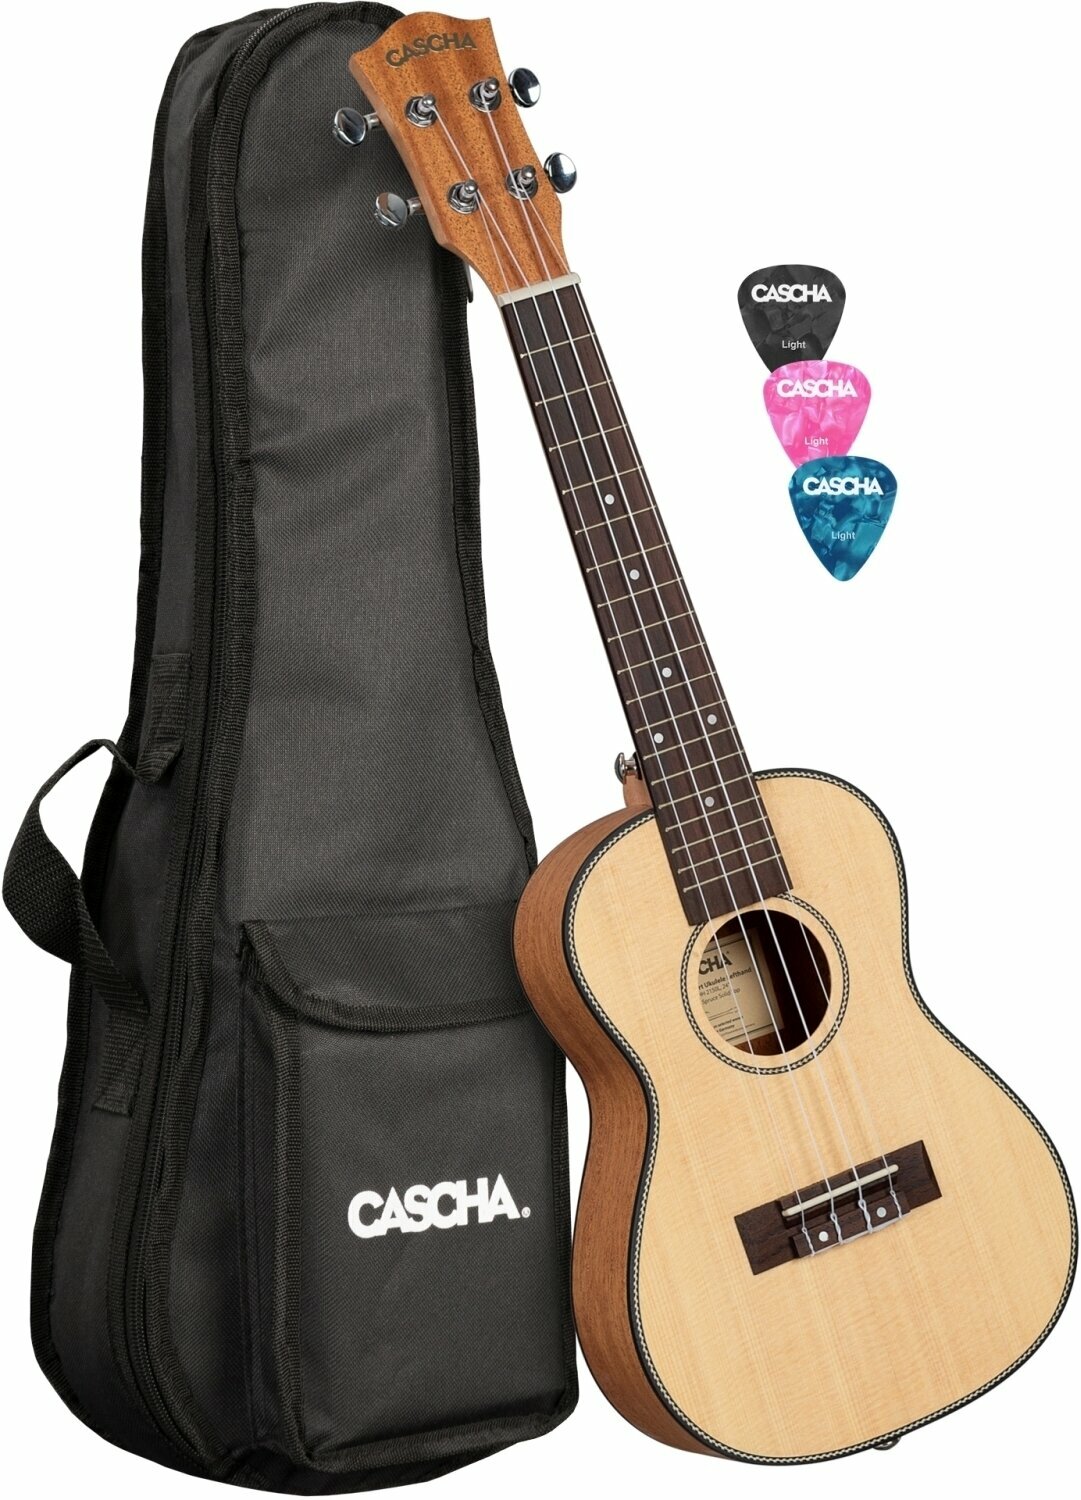 Konsert-ukulele Cascha HH 2151L Konsert-ukulele Natural